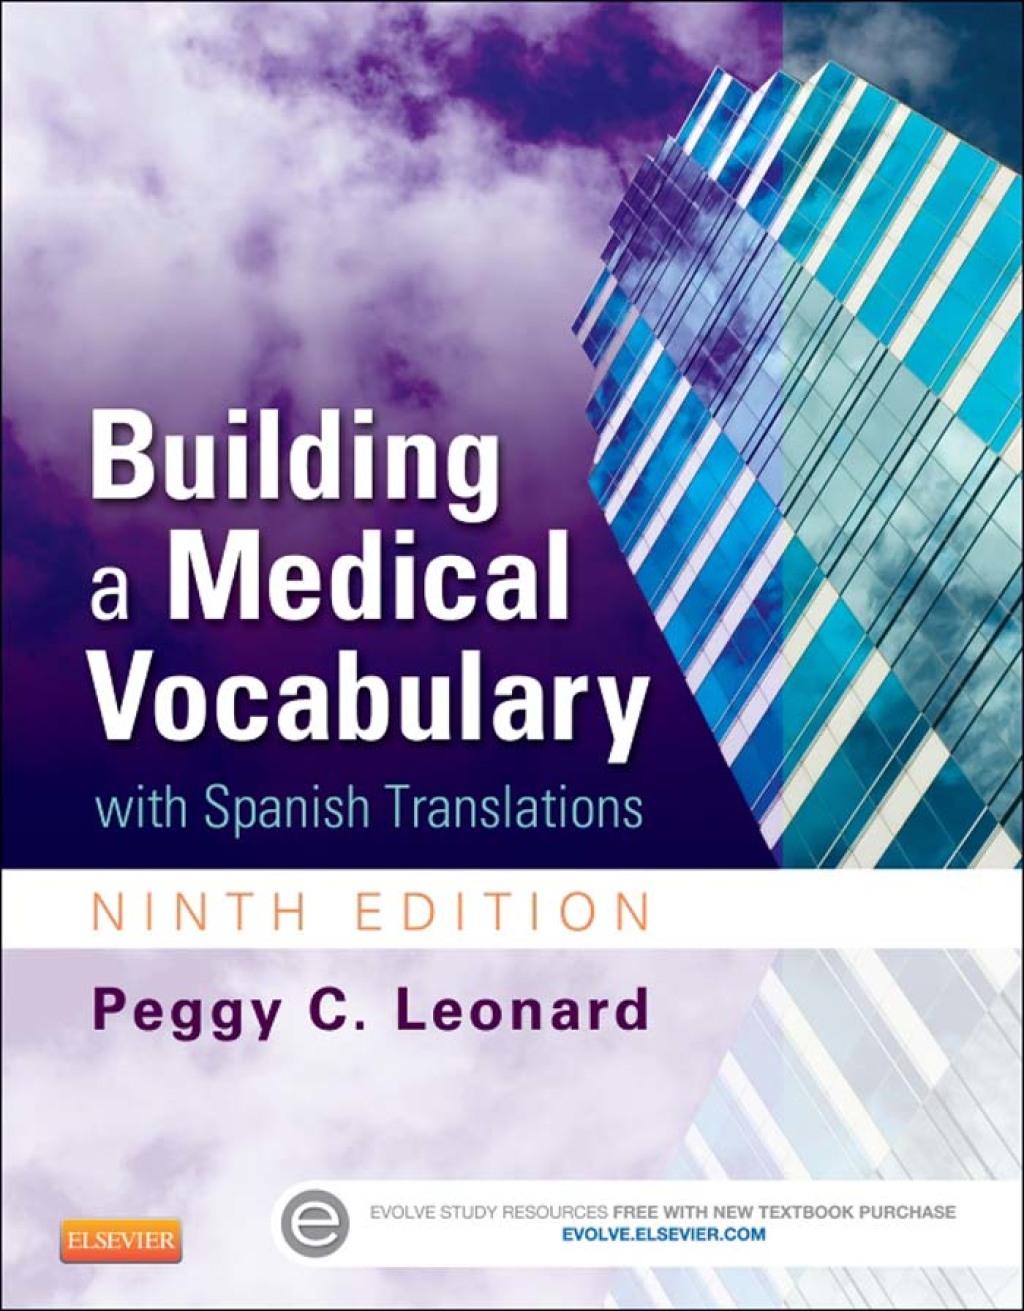 Building a Medical Vocabulary - E-Book - 9th Edition (eBook Rental)